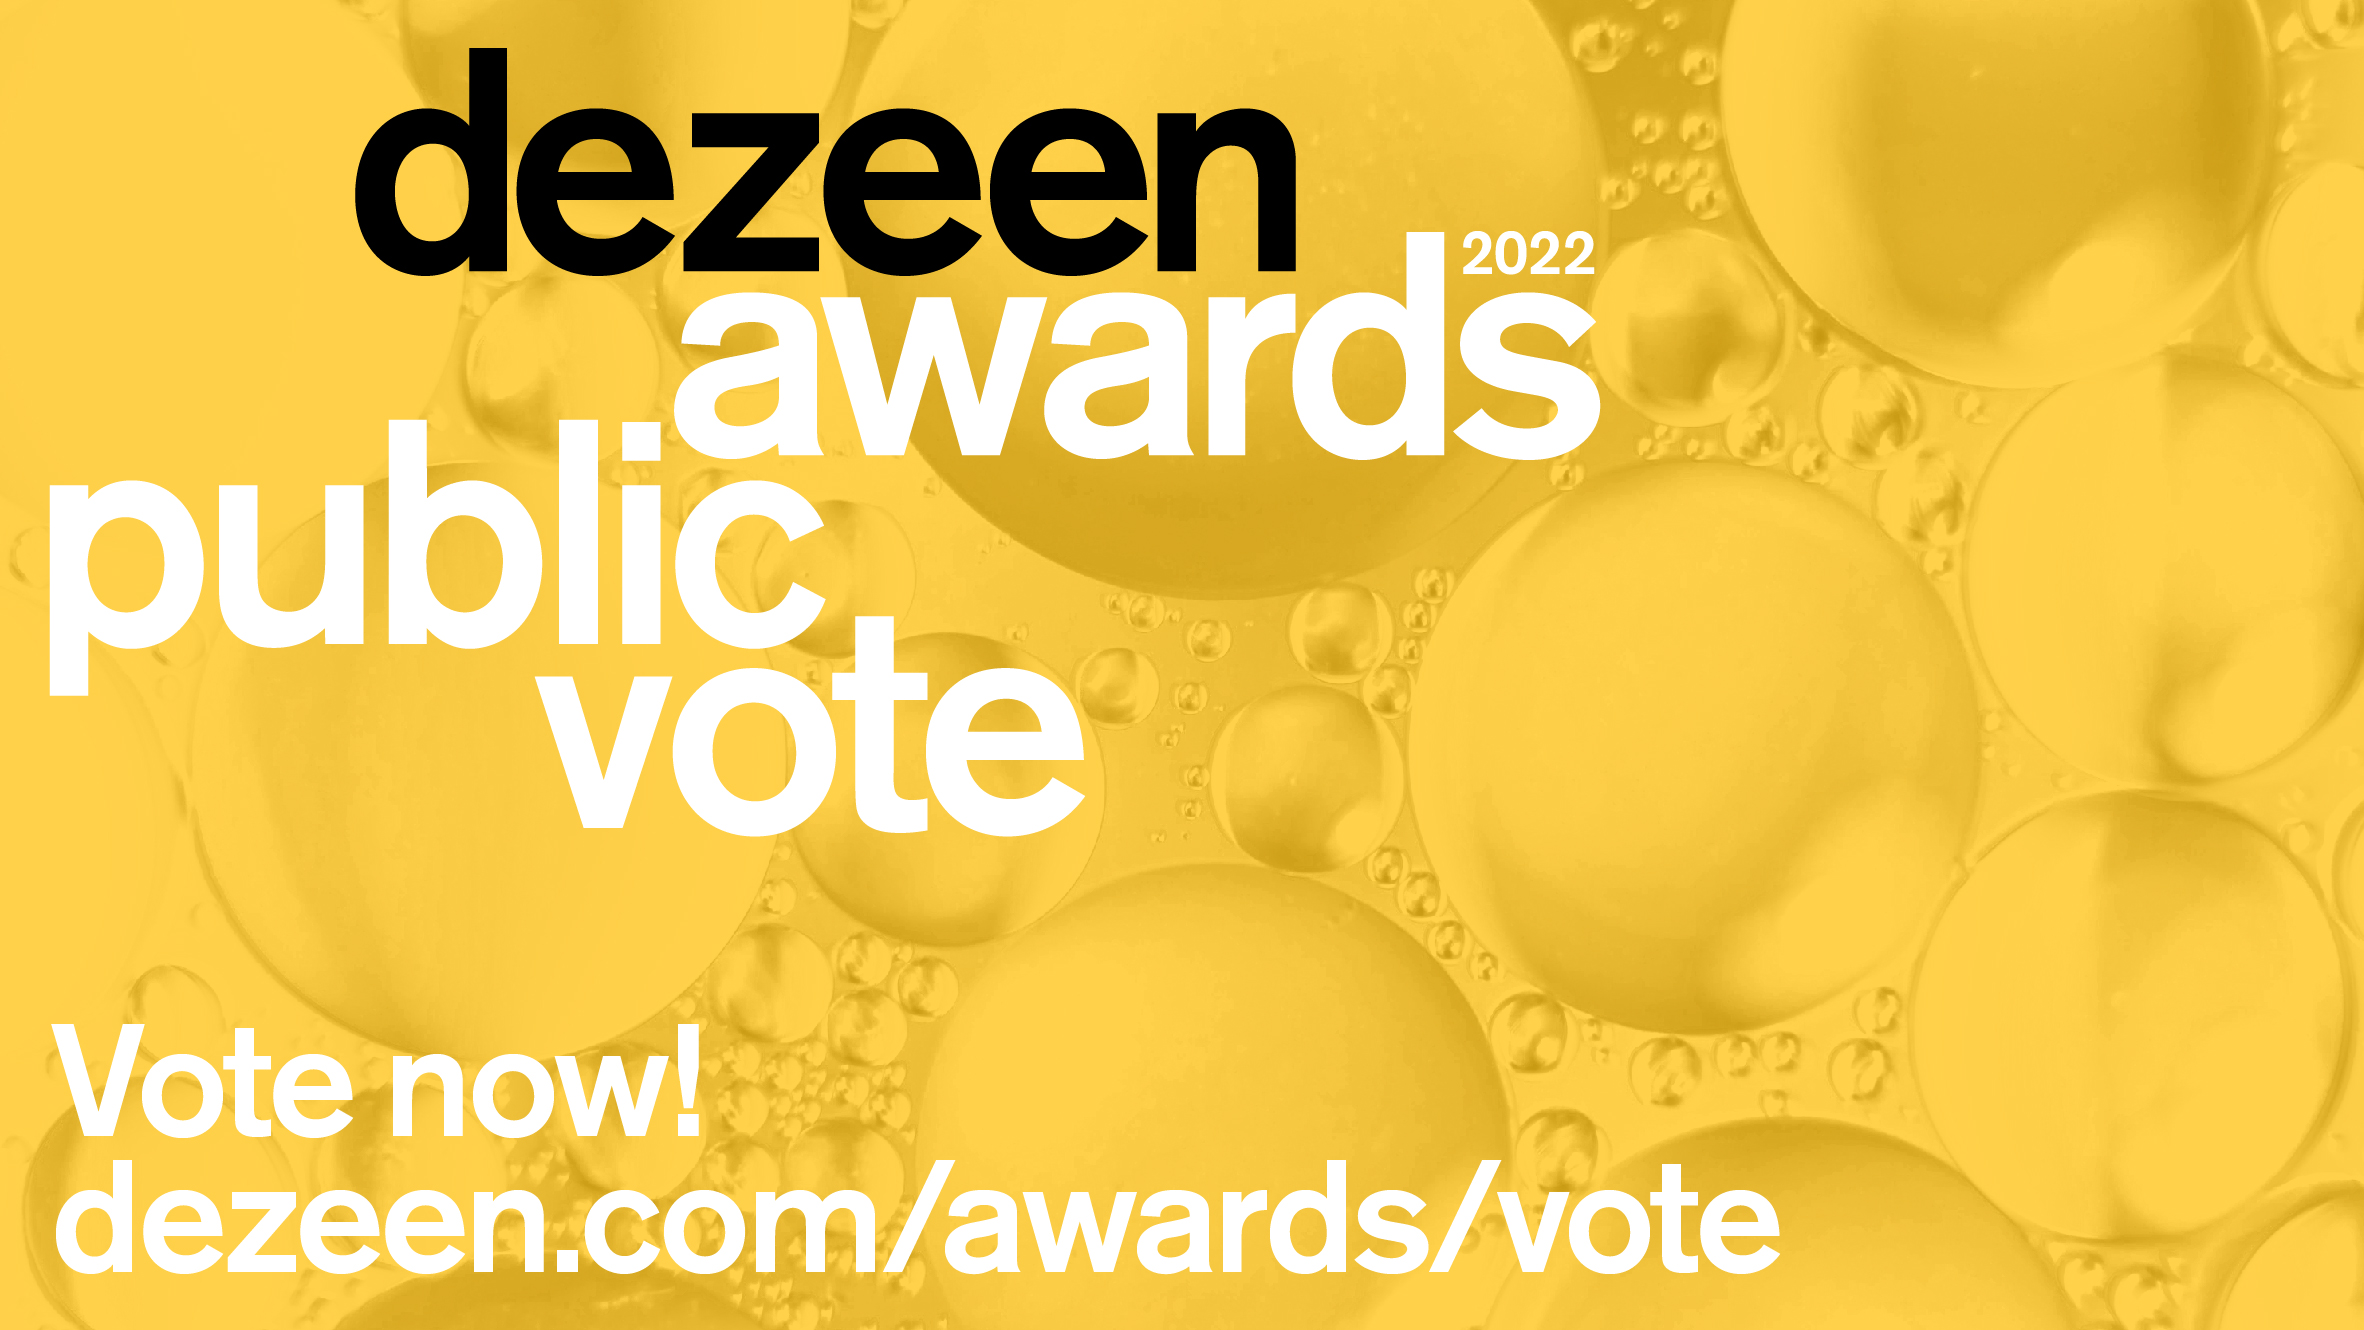 Dezeen Awards 2022 public vote opens today! Vote now Design Briefly